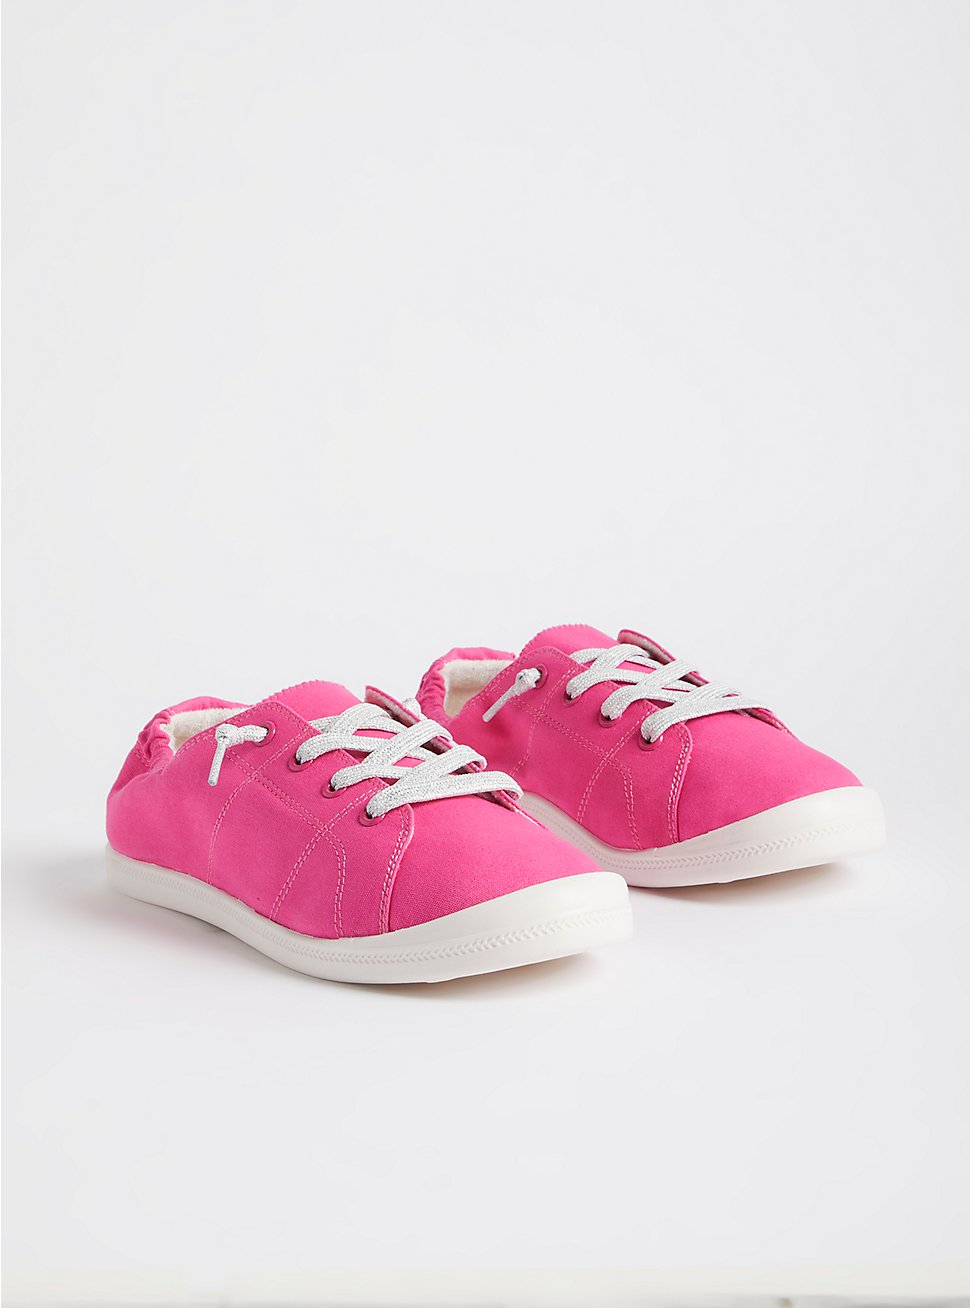 Riley Sneaker - Canvas Pink (WW), PINK, hi-res